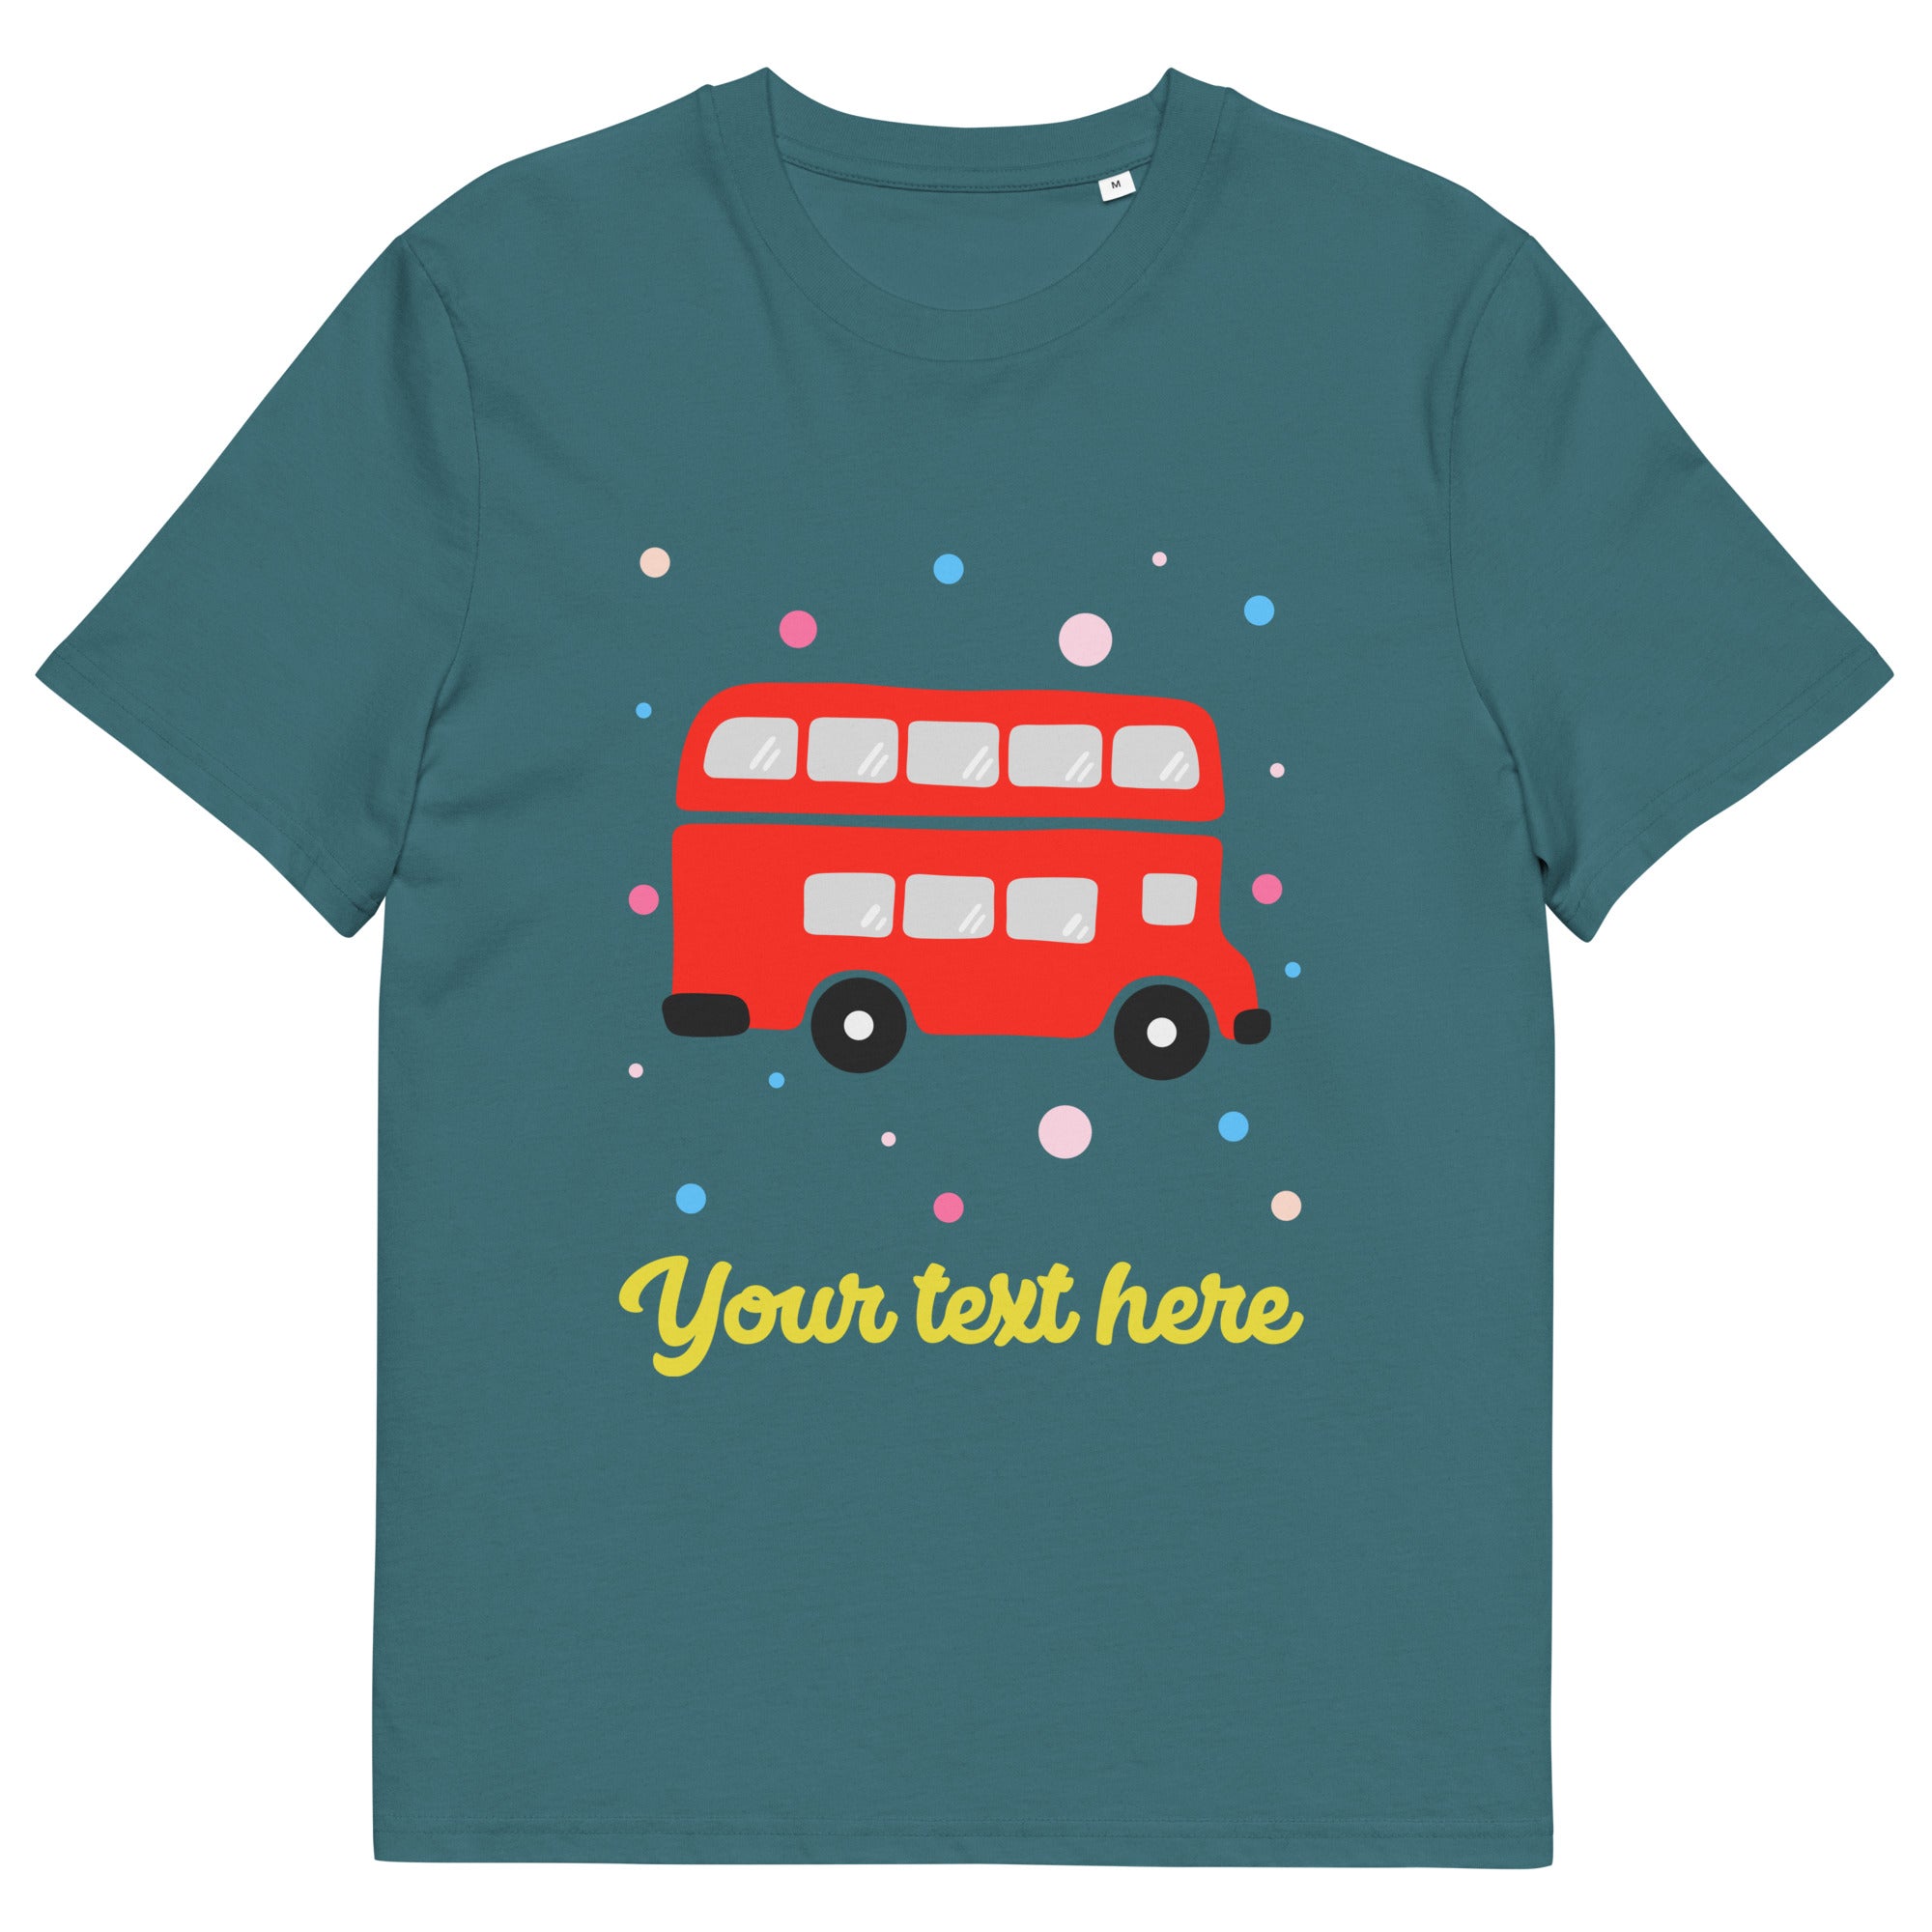 Personalised Custom Text - Organic Cotton Adults Unisex T-Shirt - London Doodles - Red Bus - Stargazer